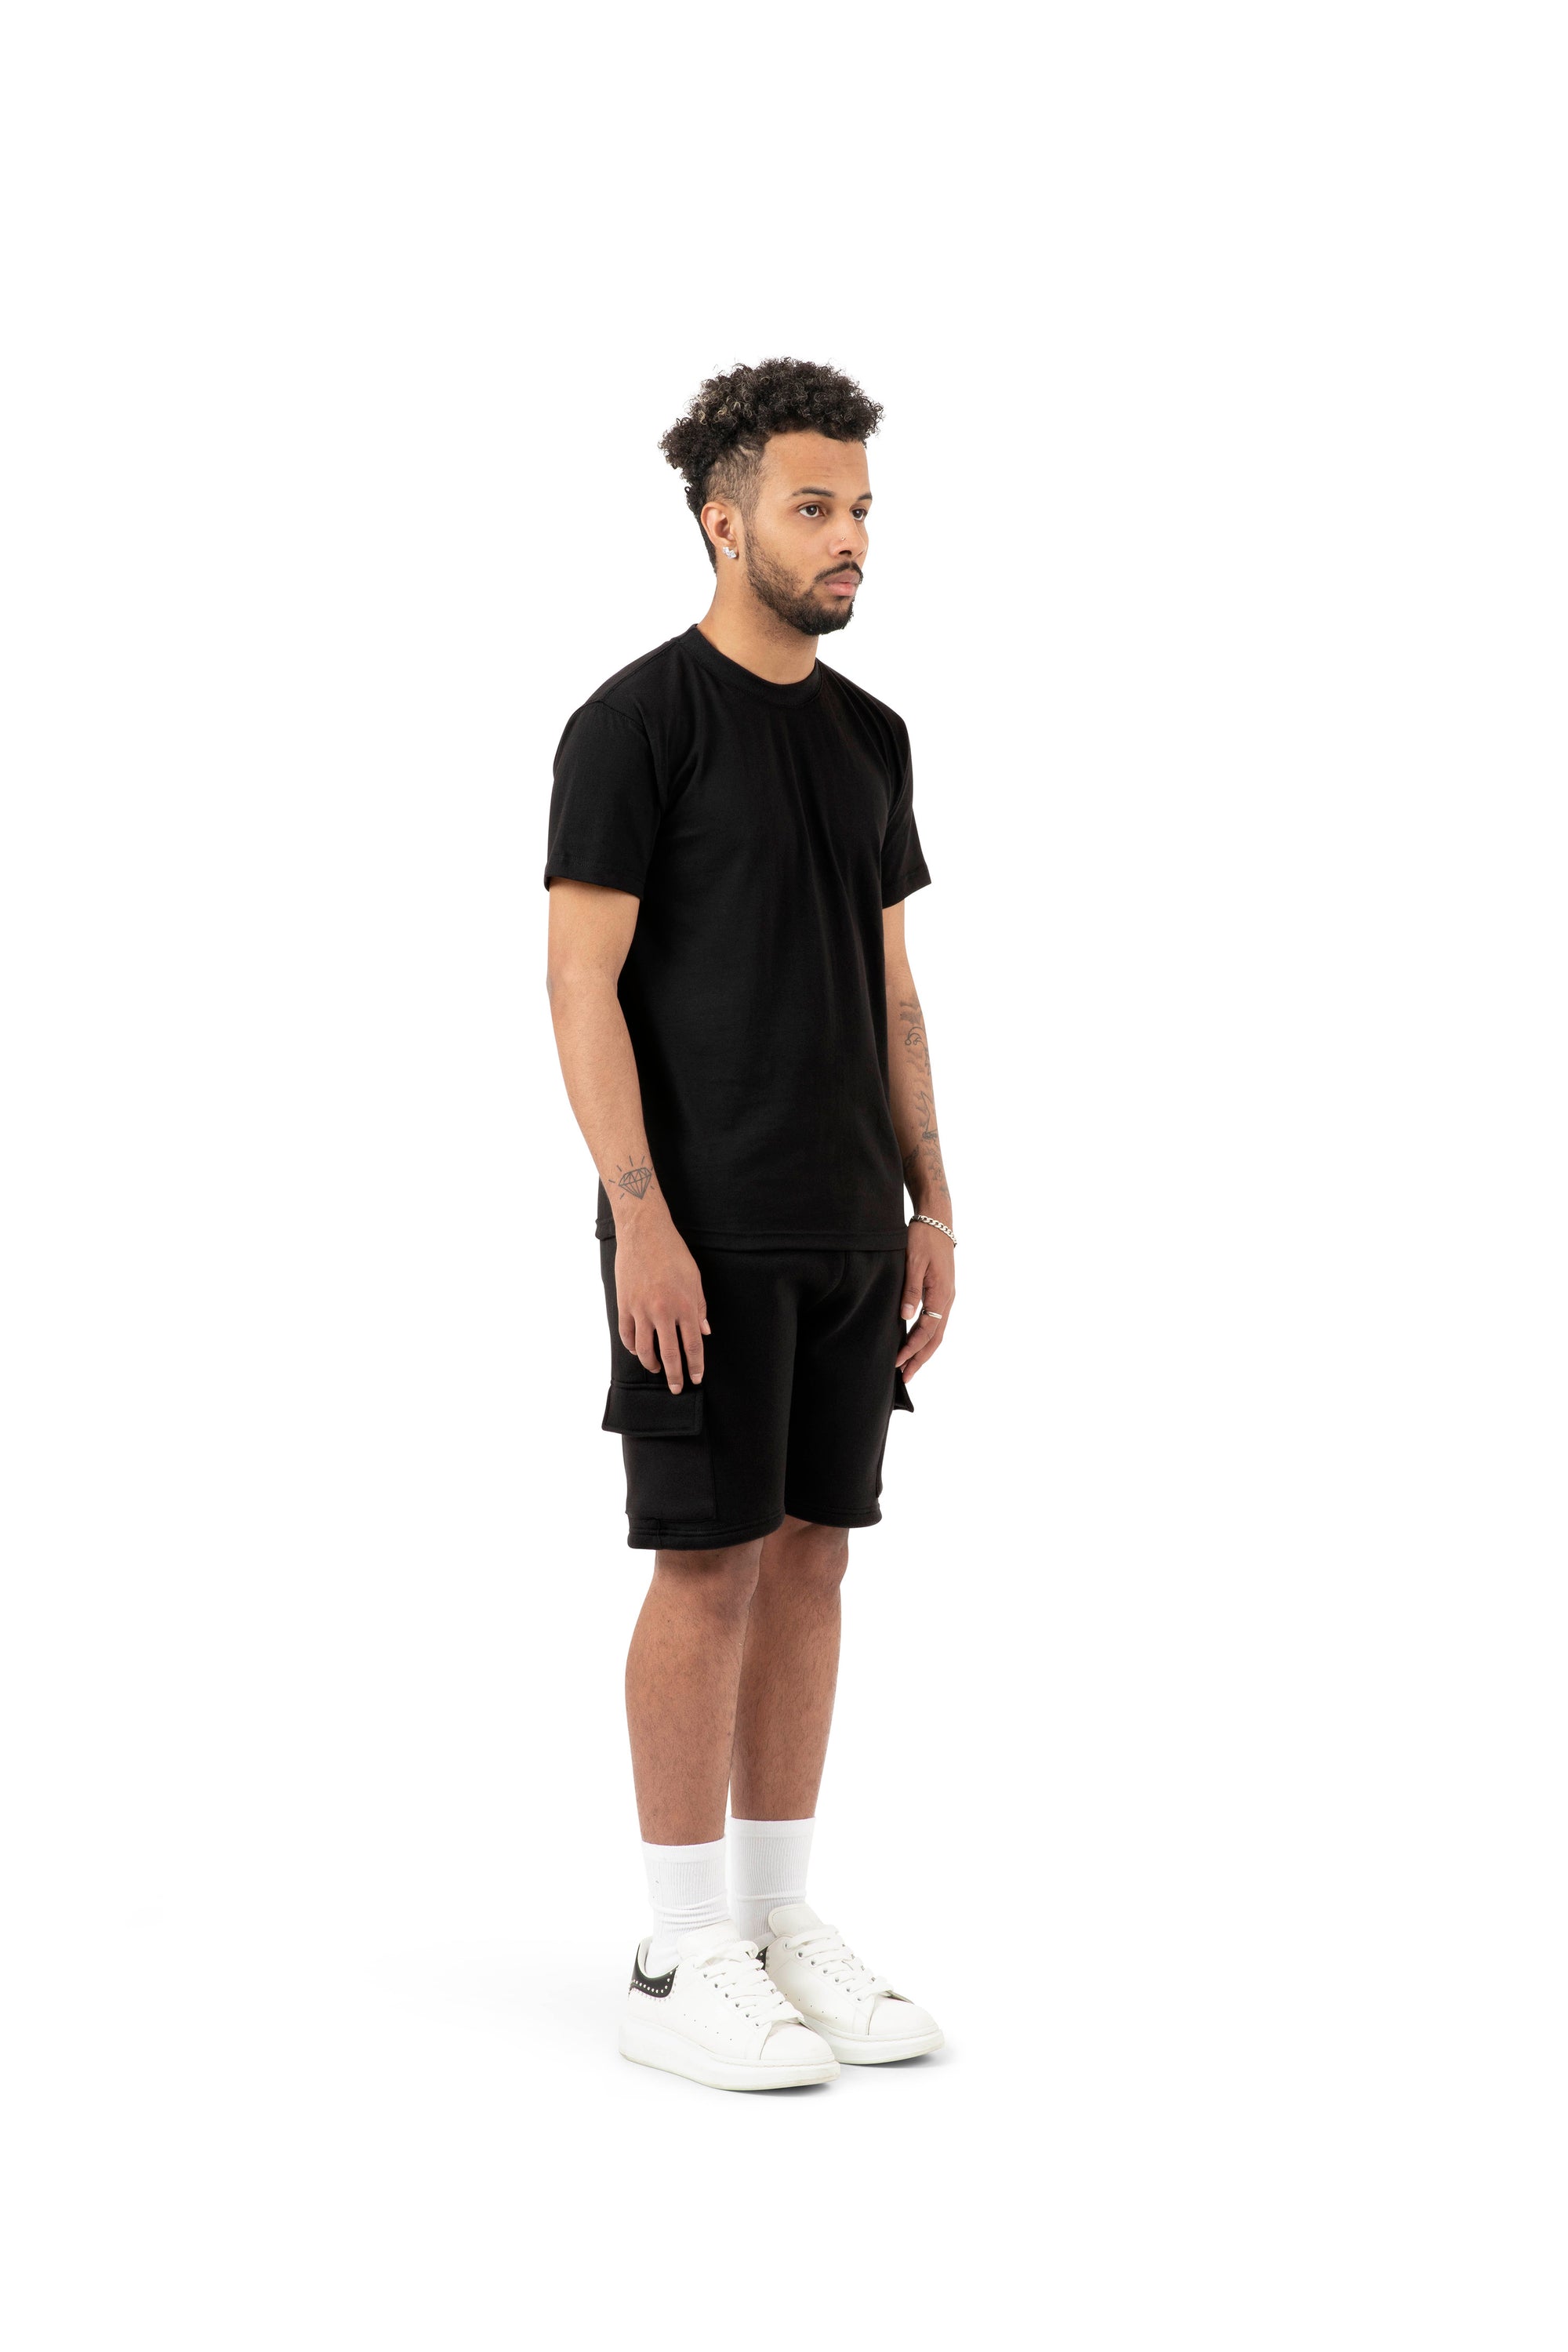 Wholesale Plain Black  Slim Relaxed T-shirt and Black Cargo Shorts